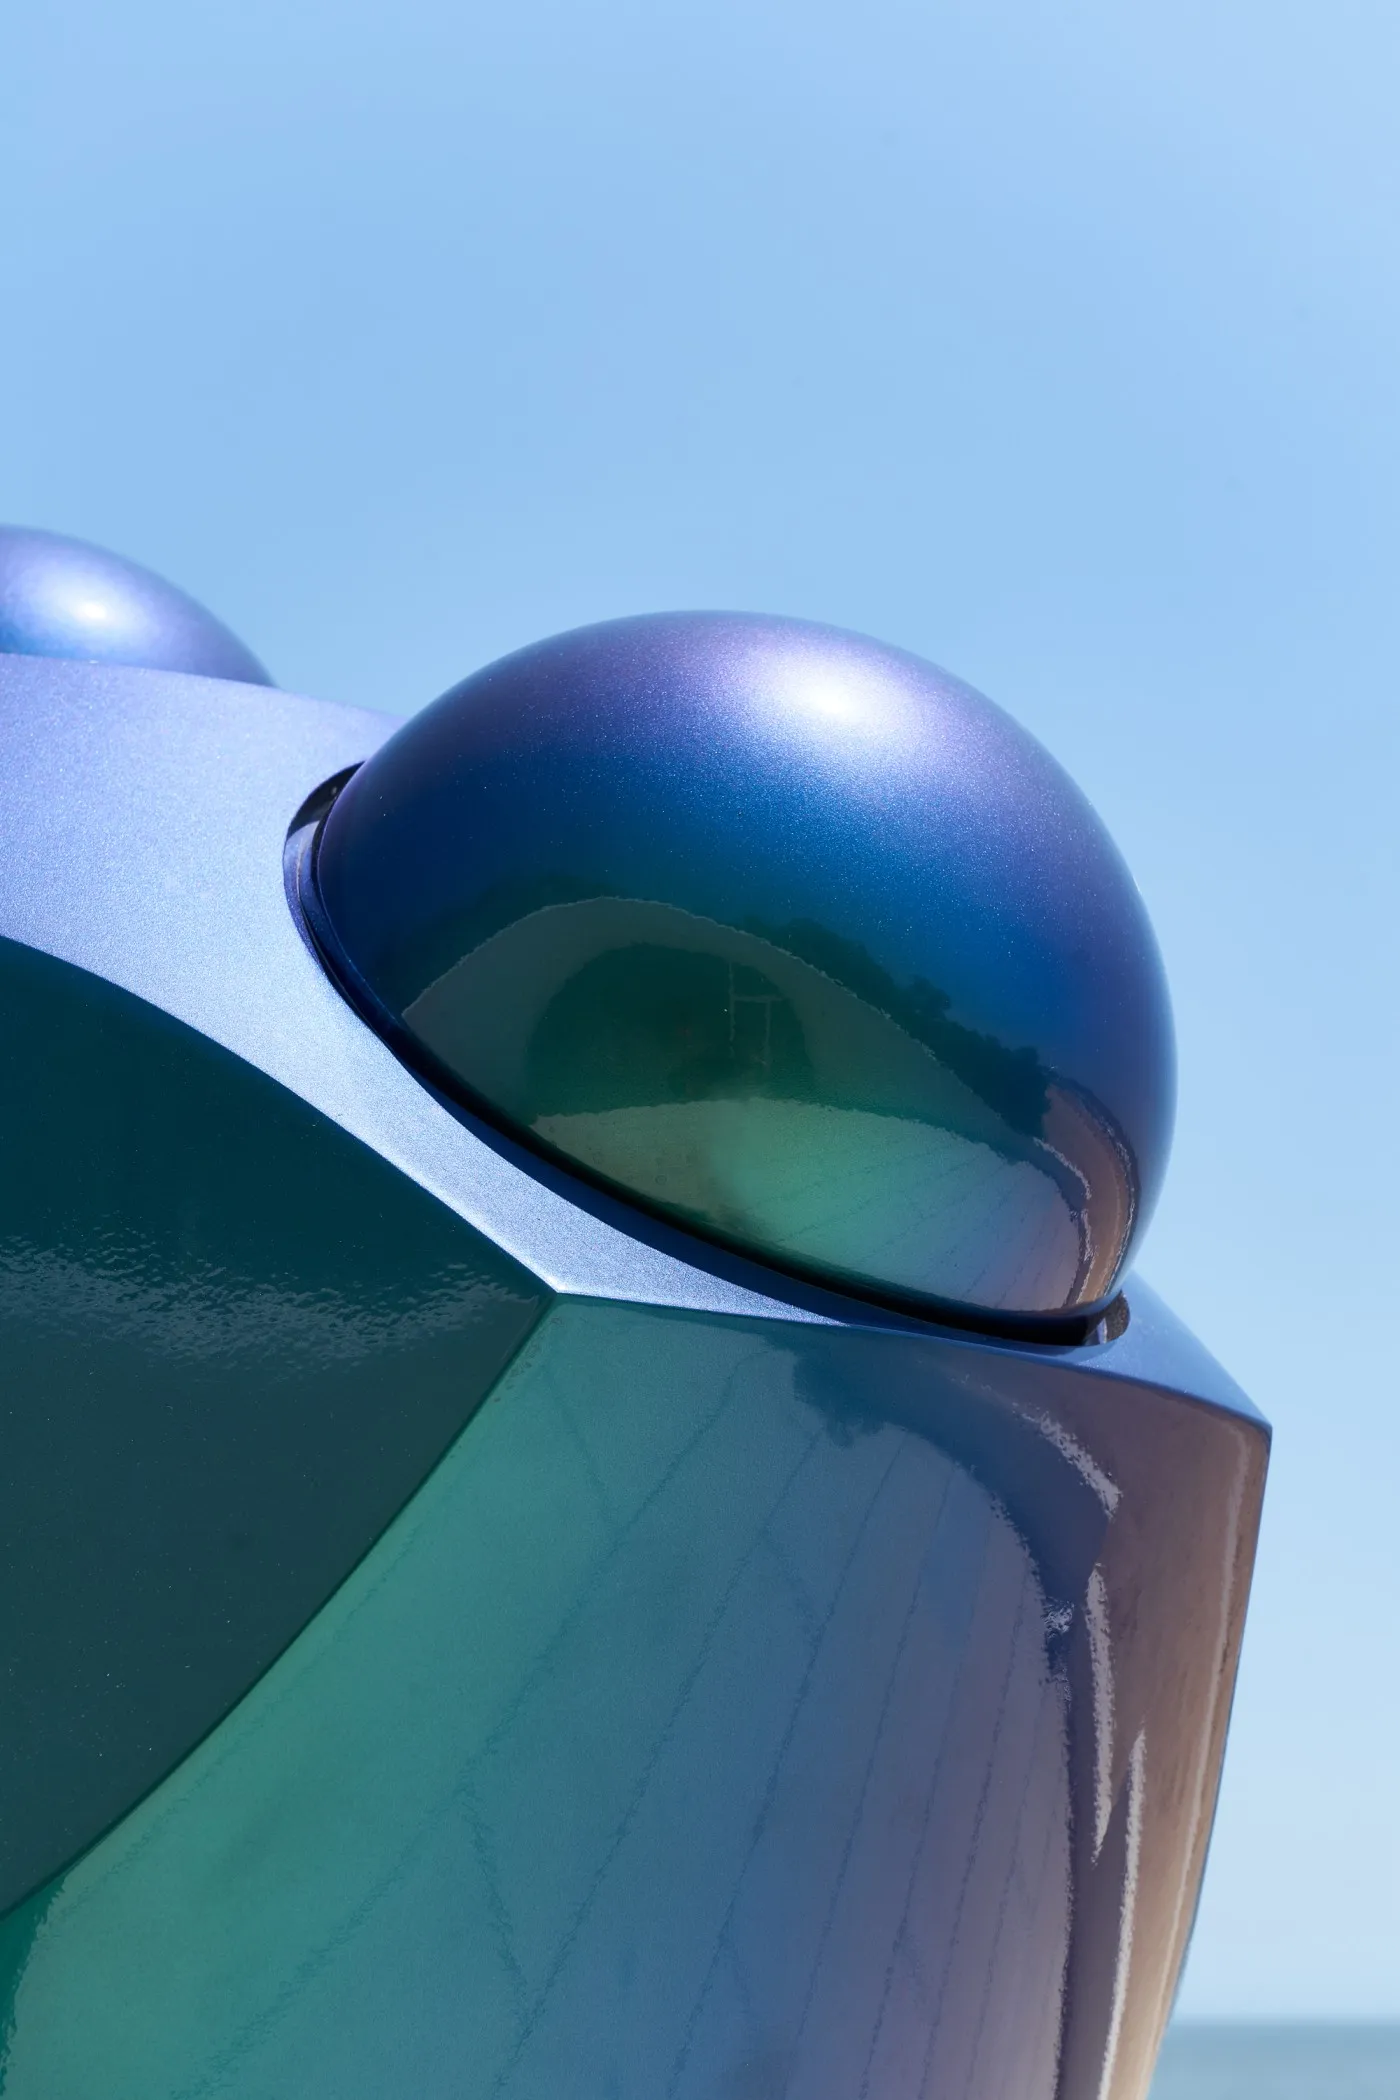 A iridescent-coloured sculpture (close-up)